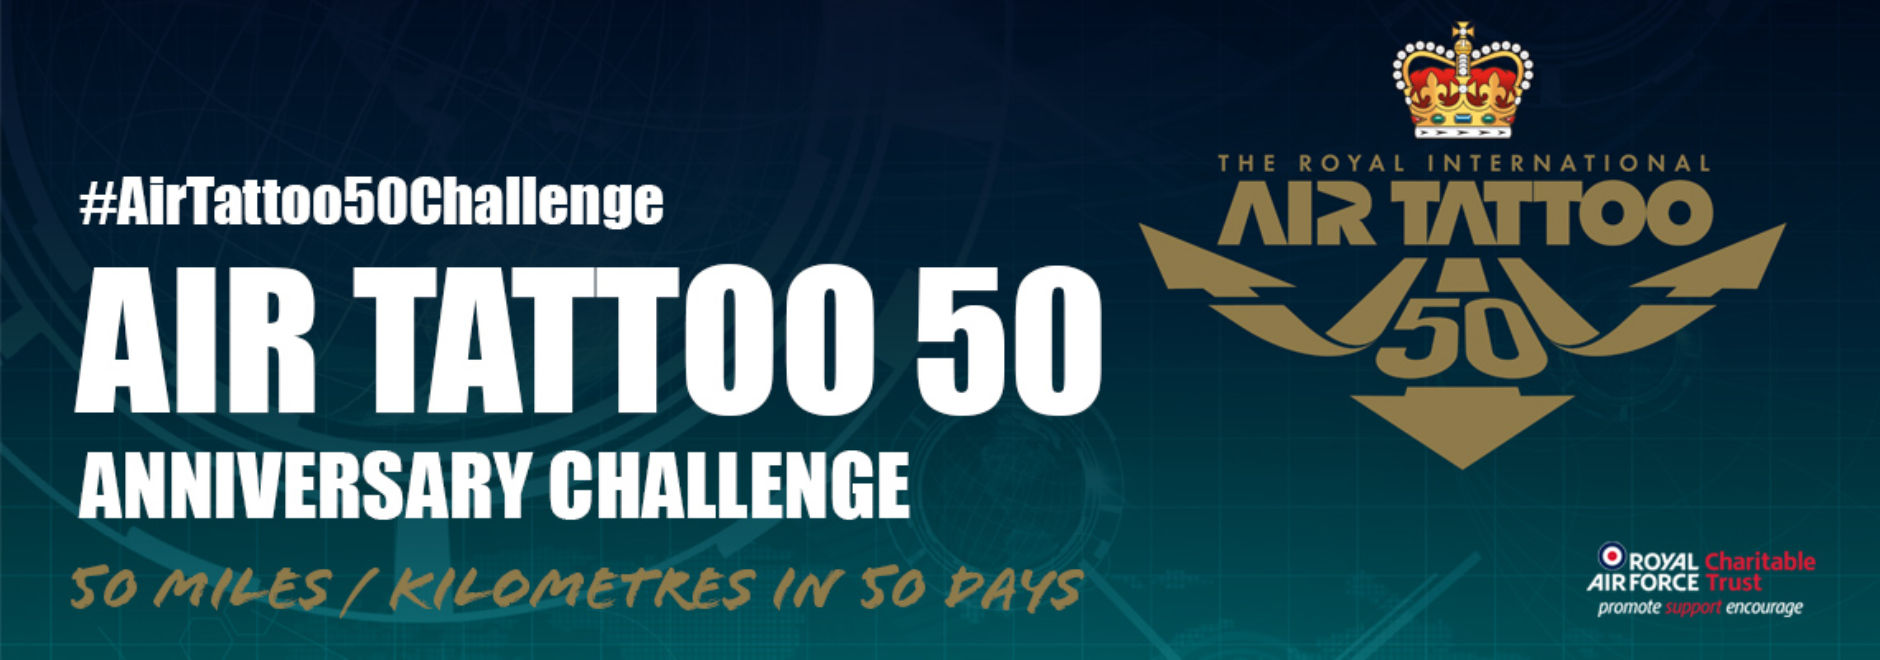 Air Tattoo’s 50th Challenge Anniversary header.